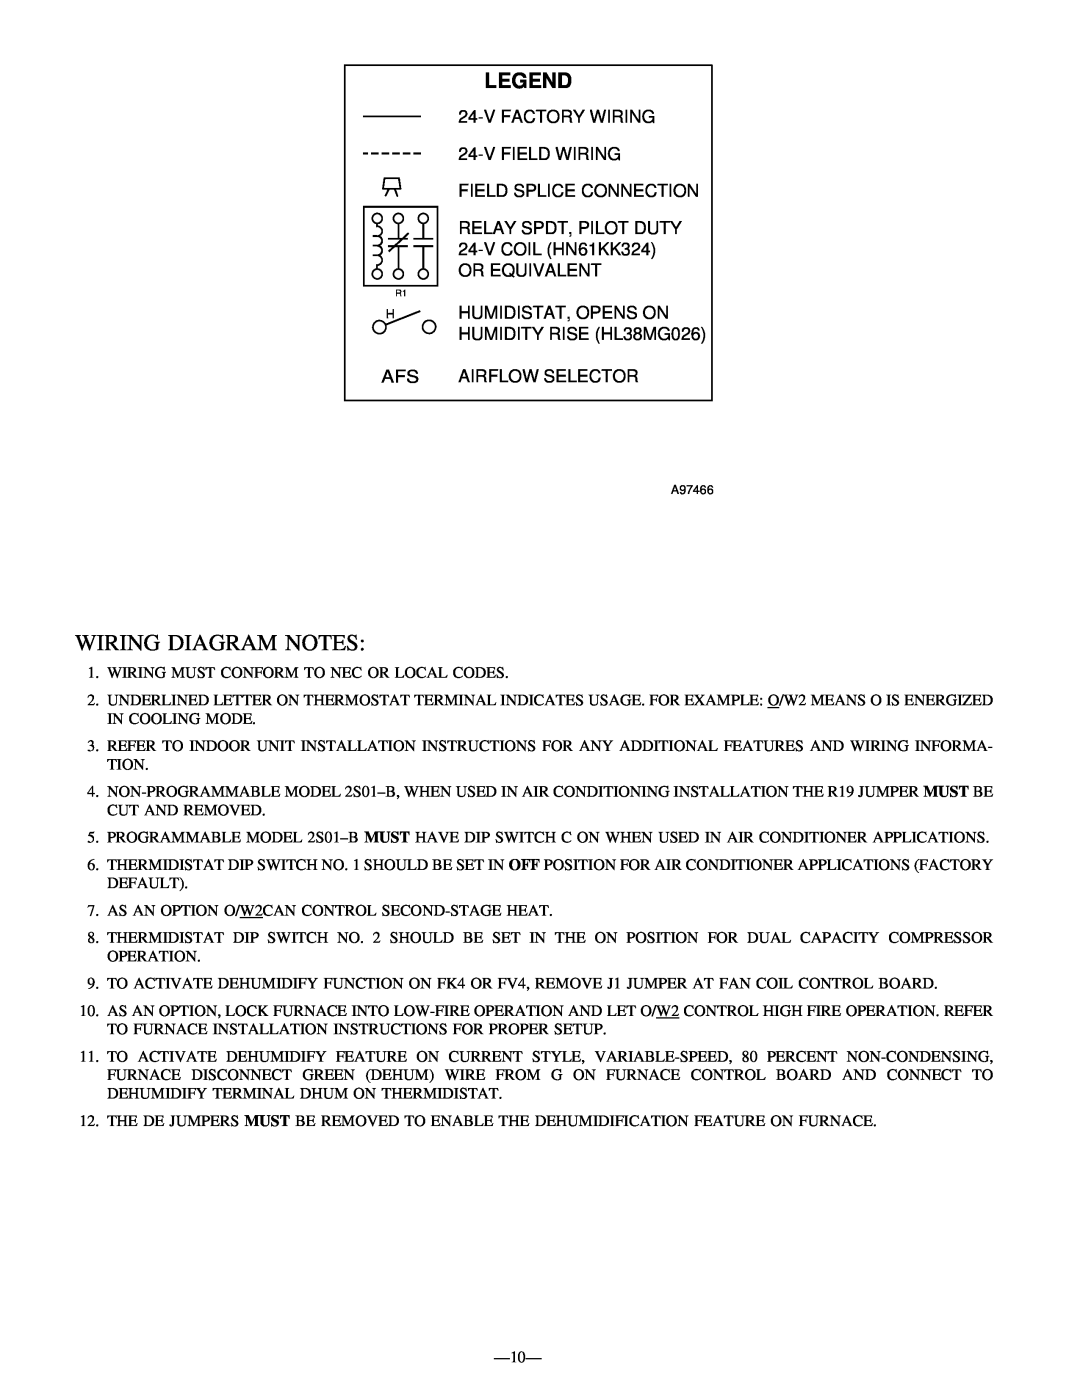 Bryant 598B instruction manual V FACTORY WIRING 24-V FIELD WIRING FIELD SPLICE CONNECTION, Wiring Diagram Notes 